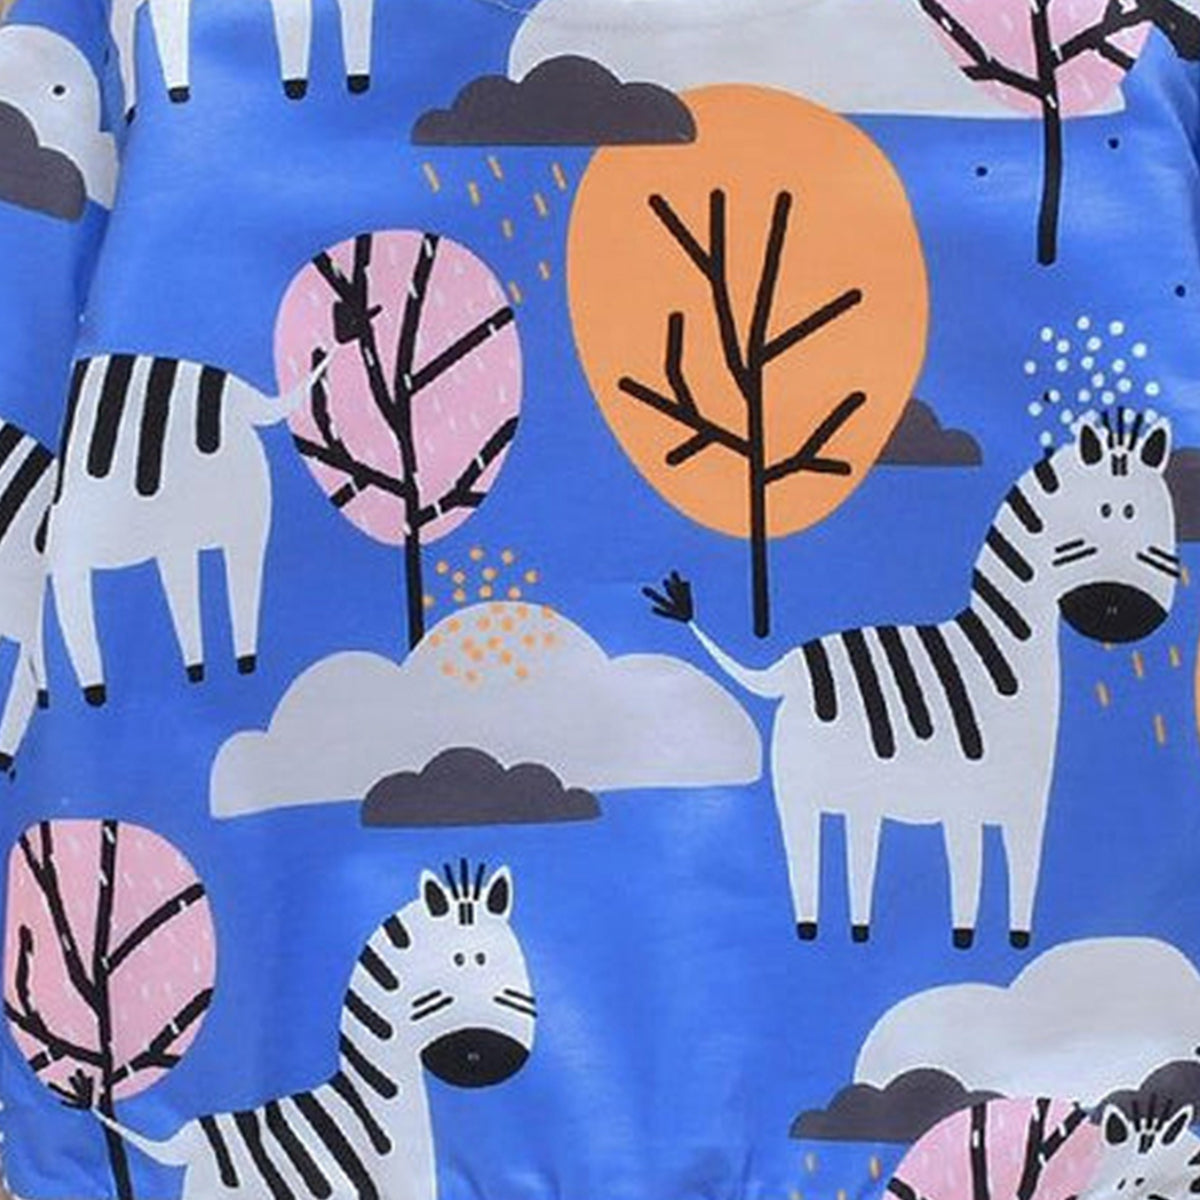 Venutaloza Boy's Animal & Tree Graphic Print Full Sleeve T-Shirt For Boy's & Girl's..